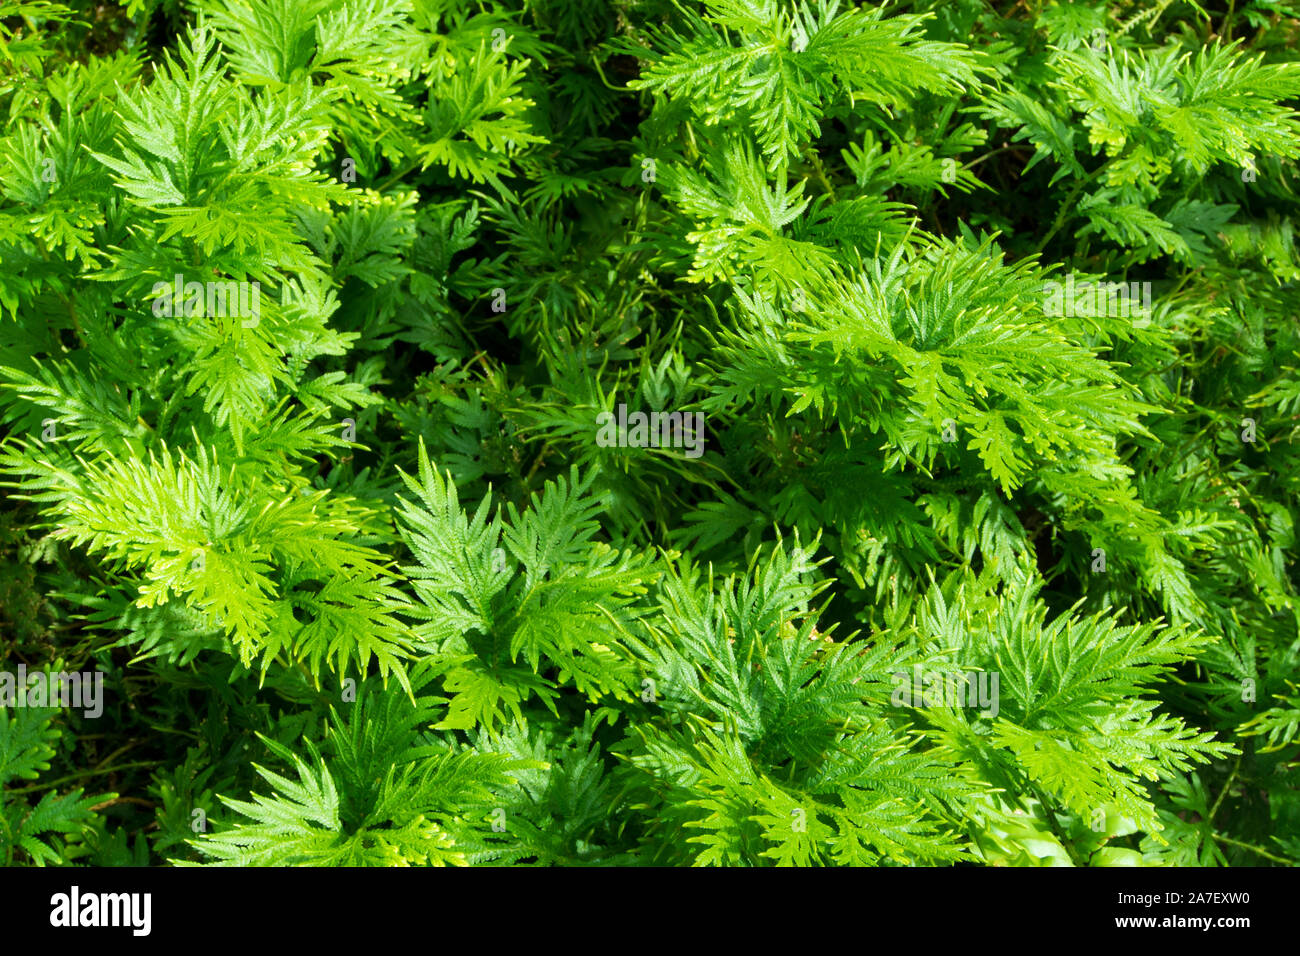 Freshness green leaf of Selaginella involvens fern Stock Photo